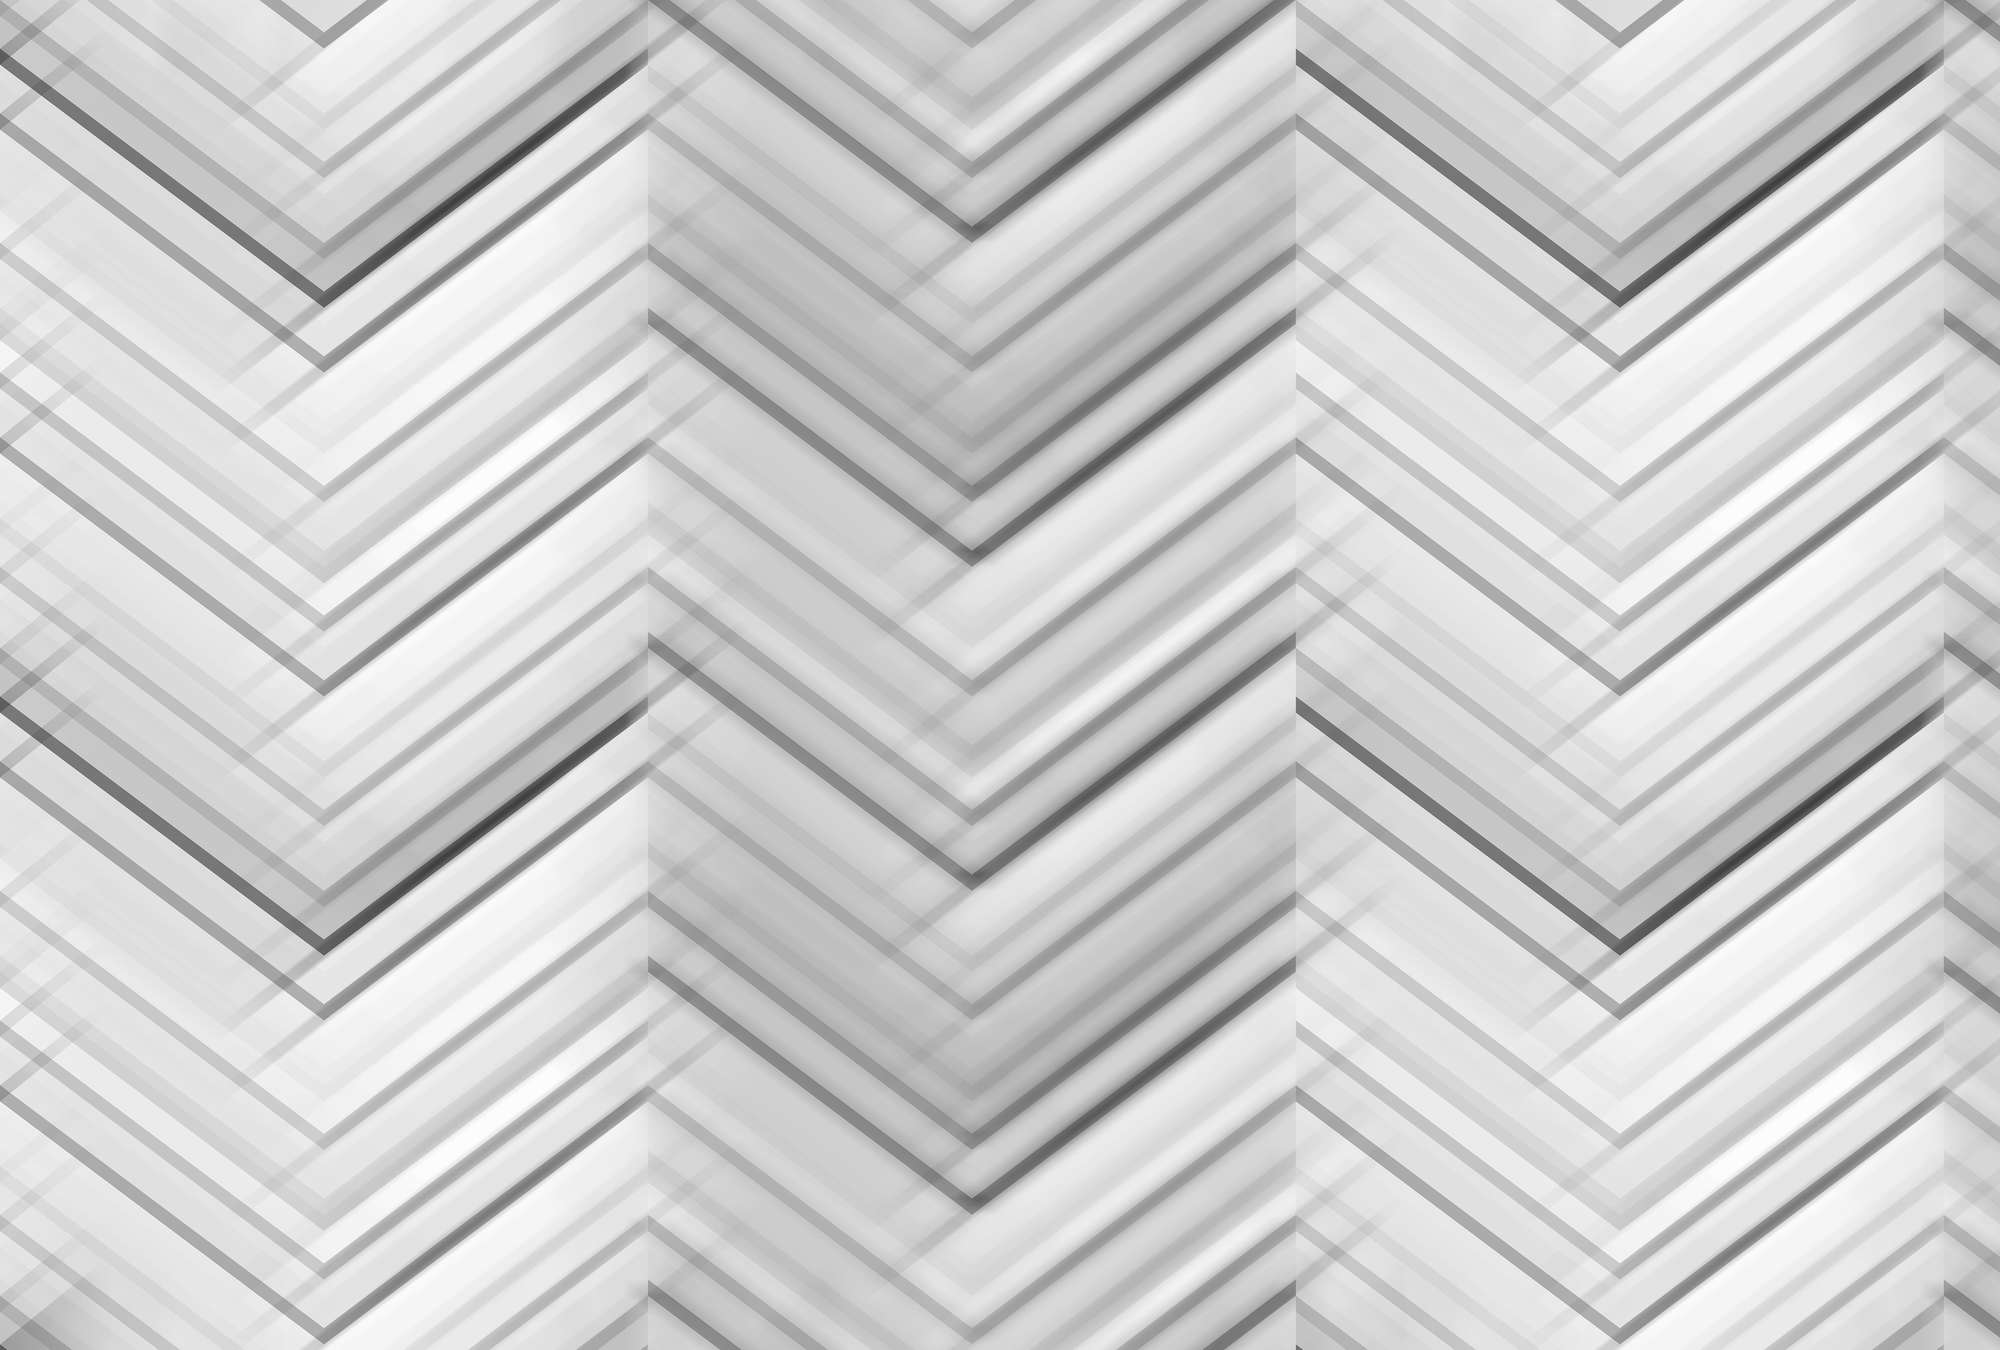             Photo wallpaper zigzag pattern & line design - grey, white, black
        